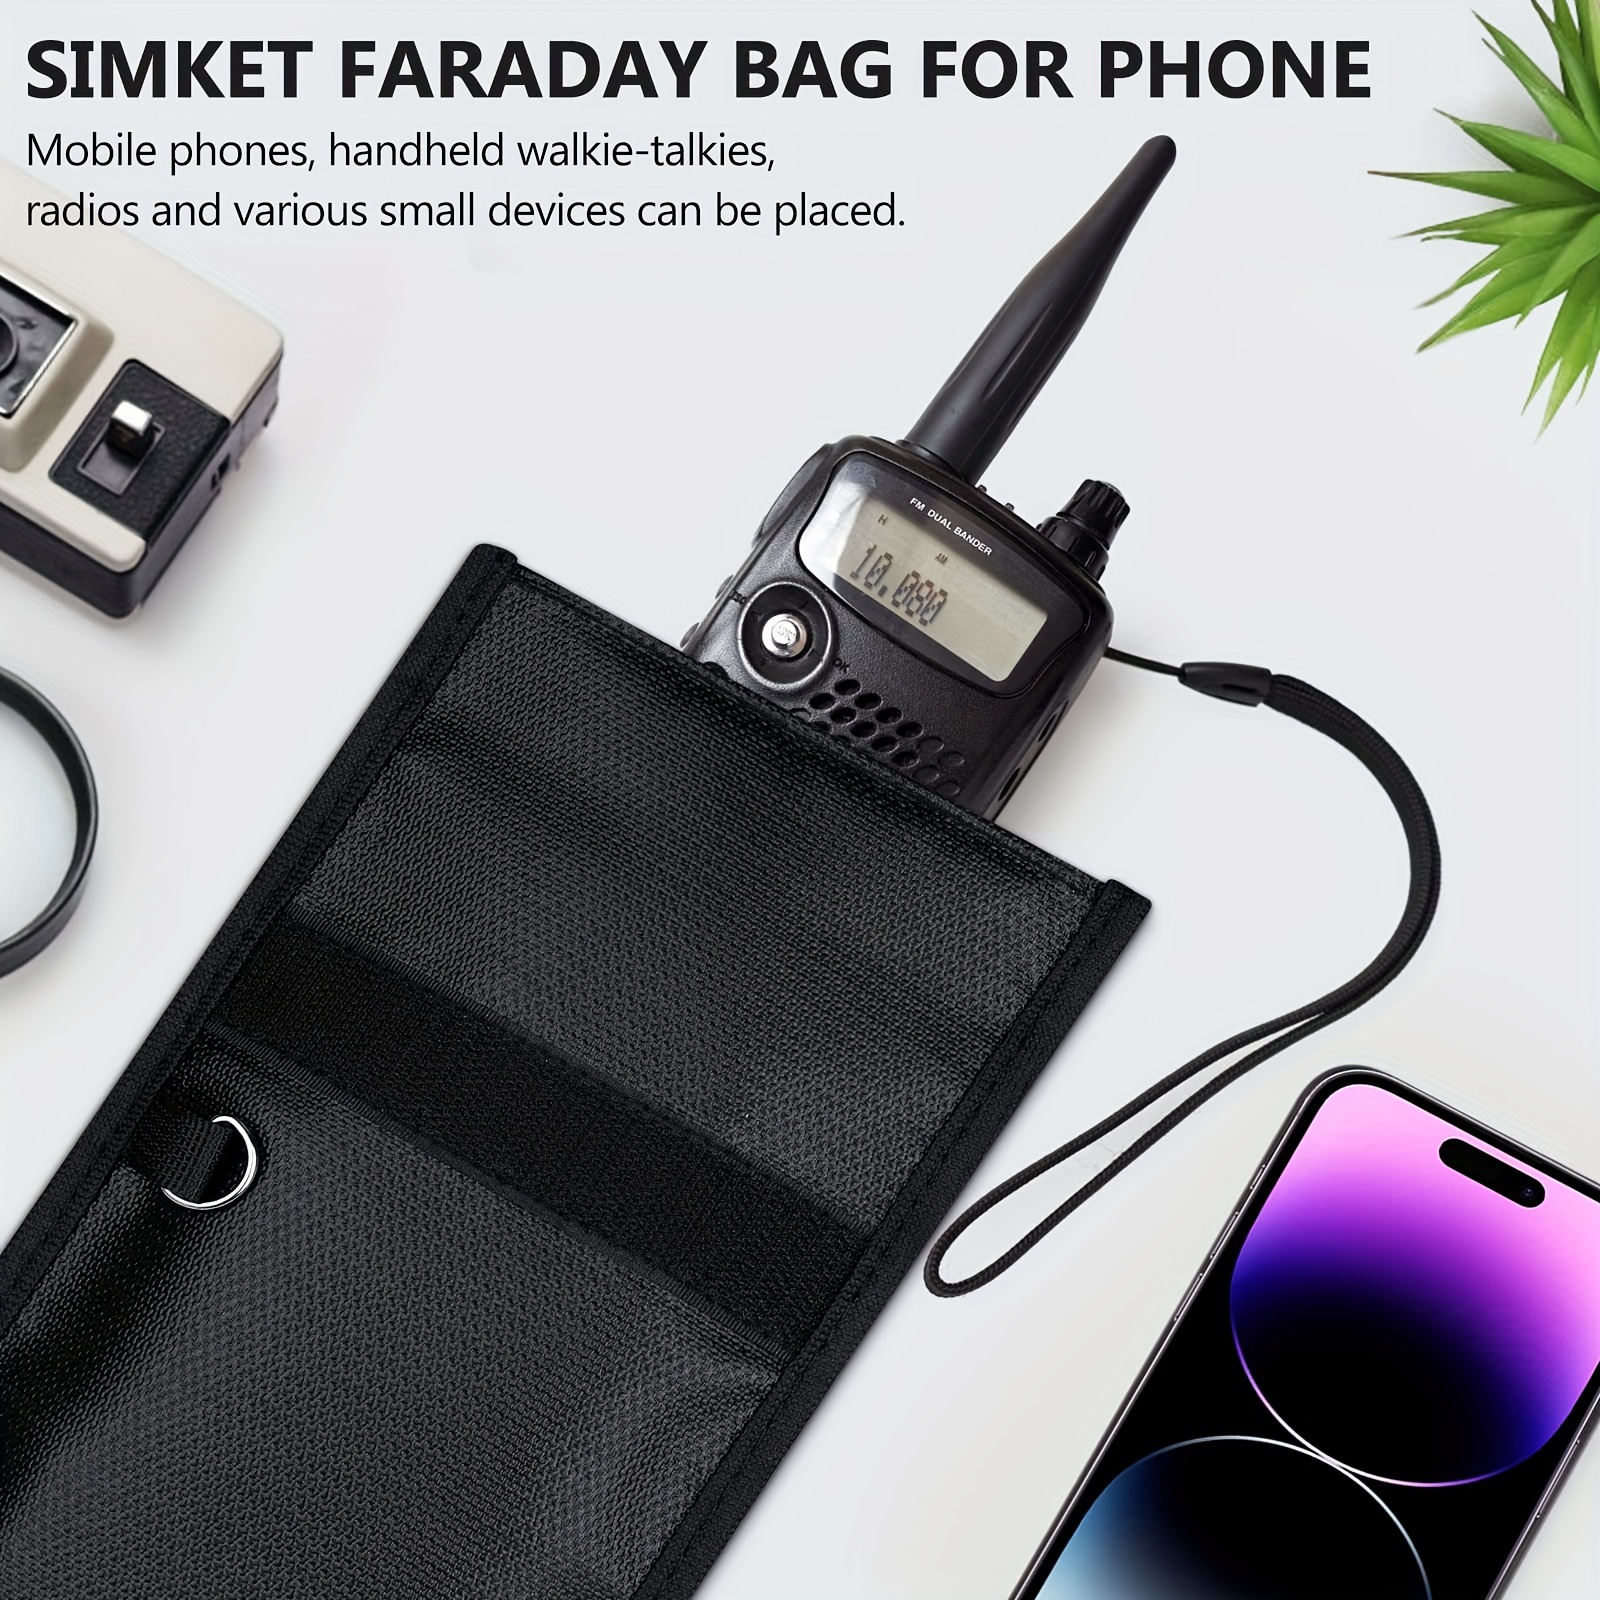 Faraday Bags Phones, Faraday Bag Cellphone